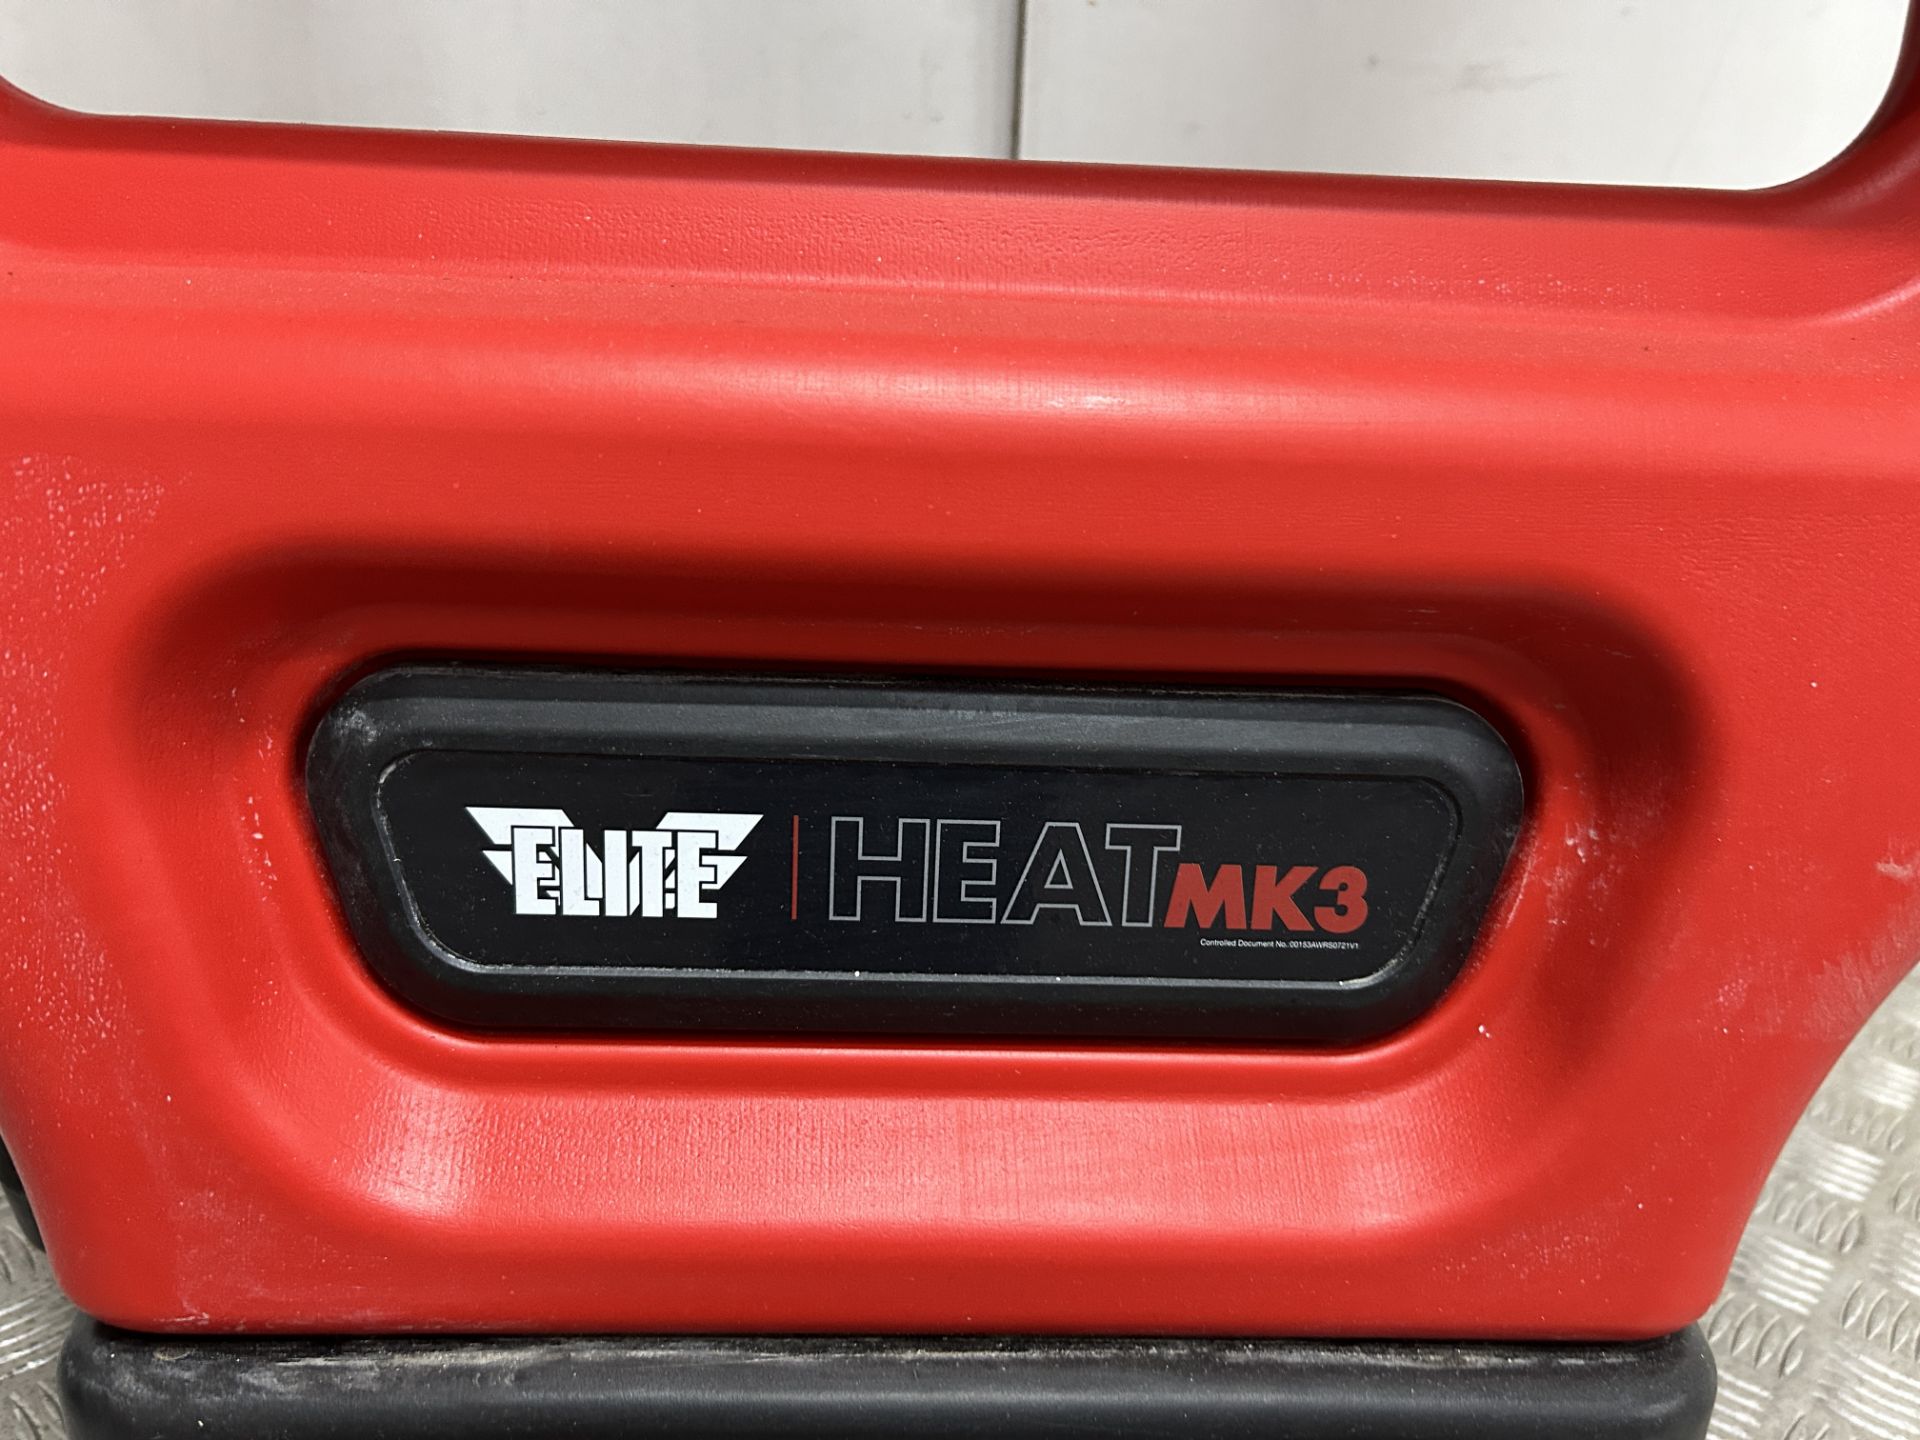 Elite Heat EH240MK3 Portable Halogen Infrared Heater - Image 3 of 6